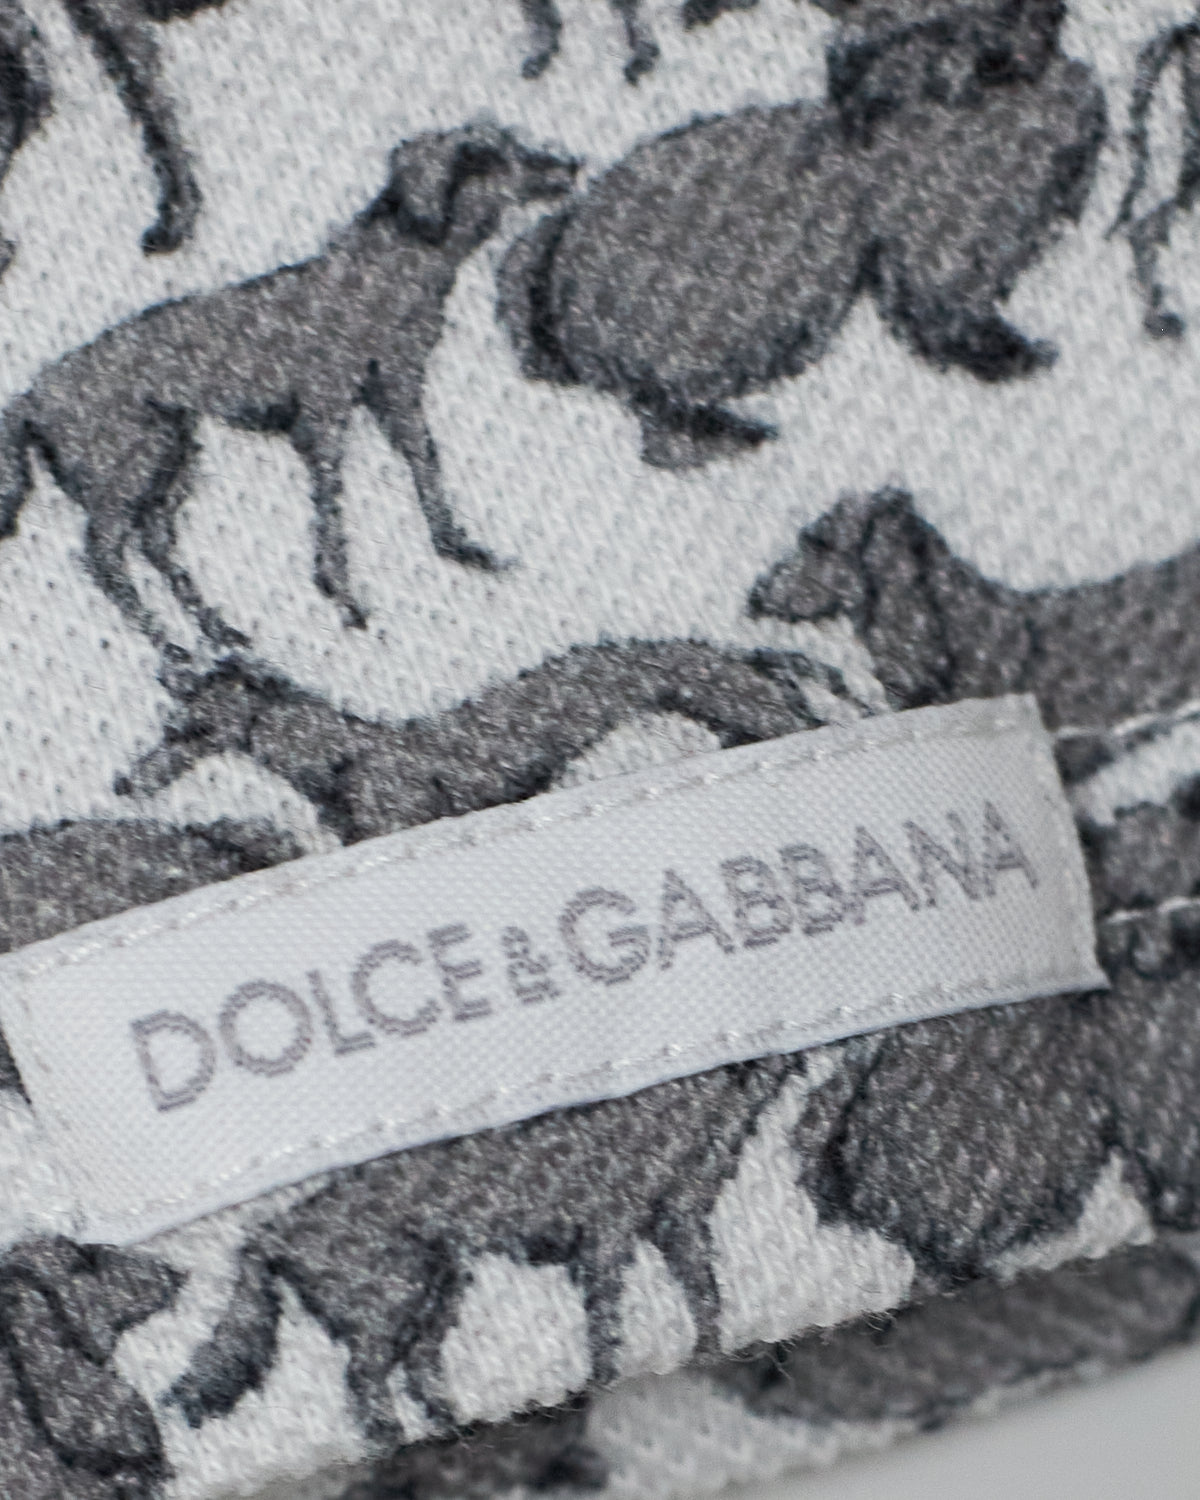 Dolce And Gabbana Polo Enfant En Gris